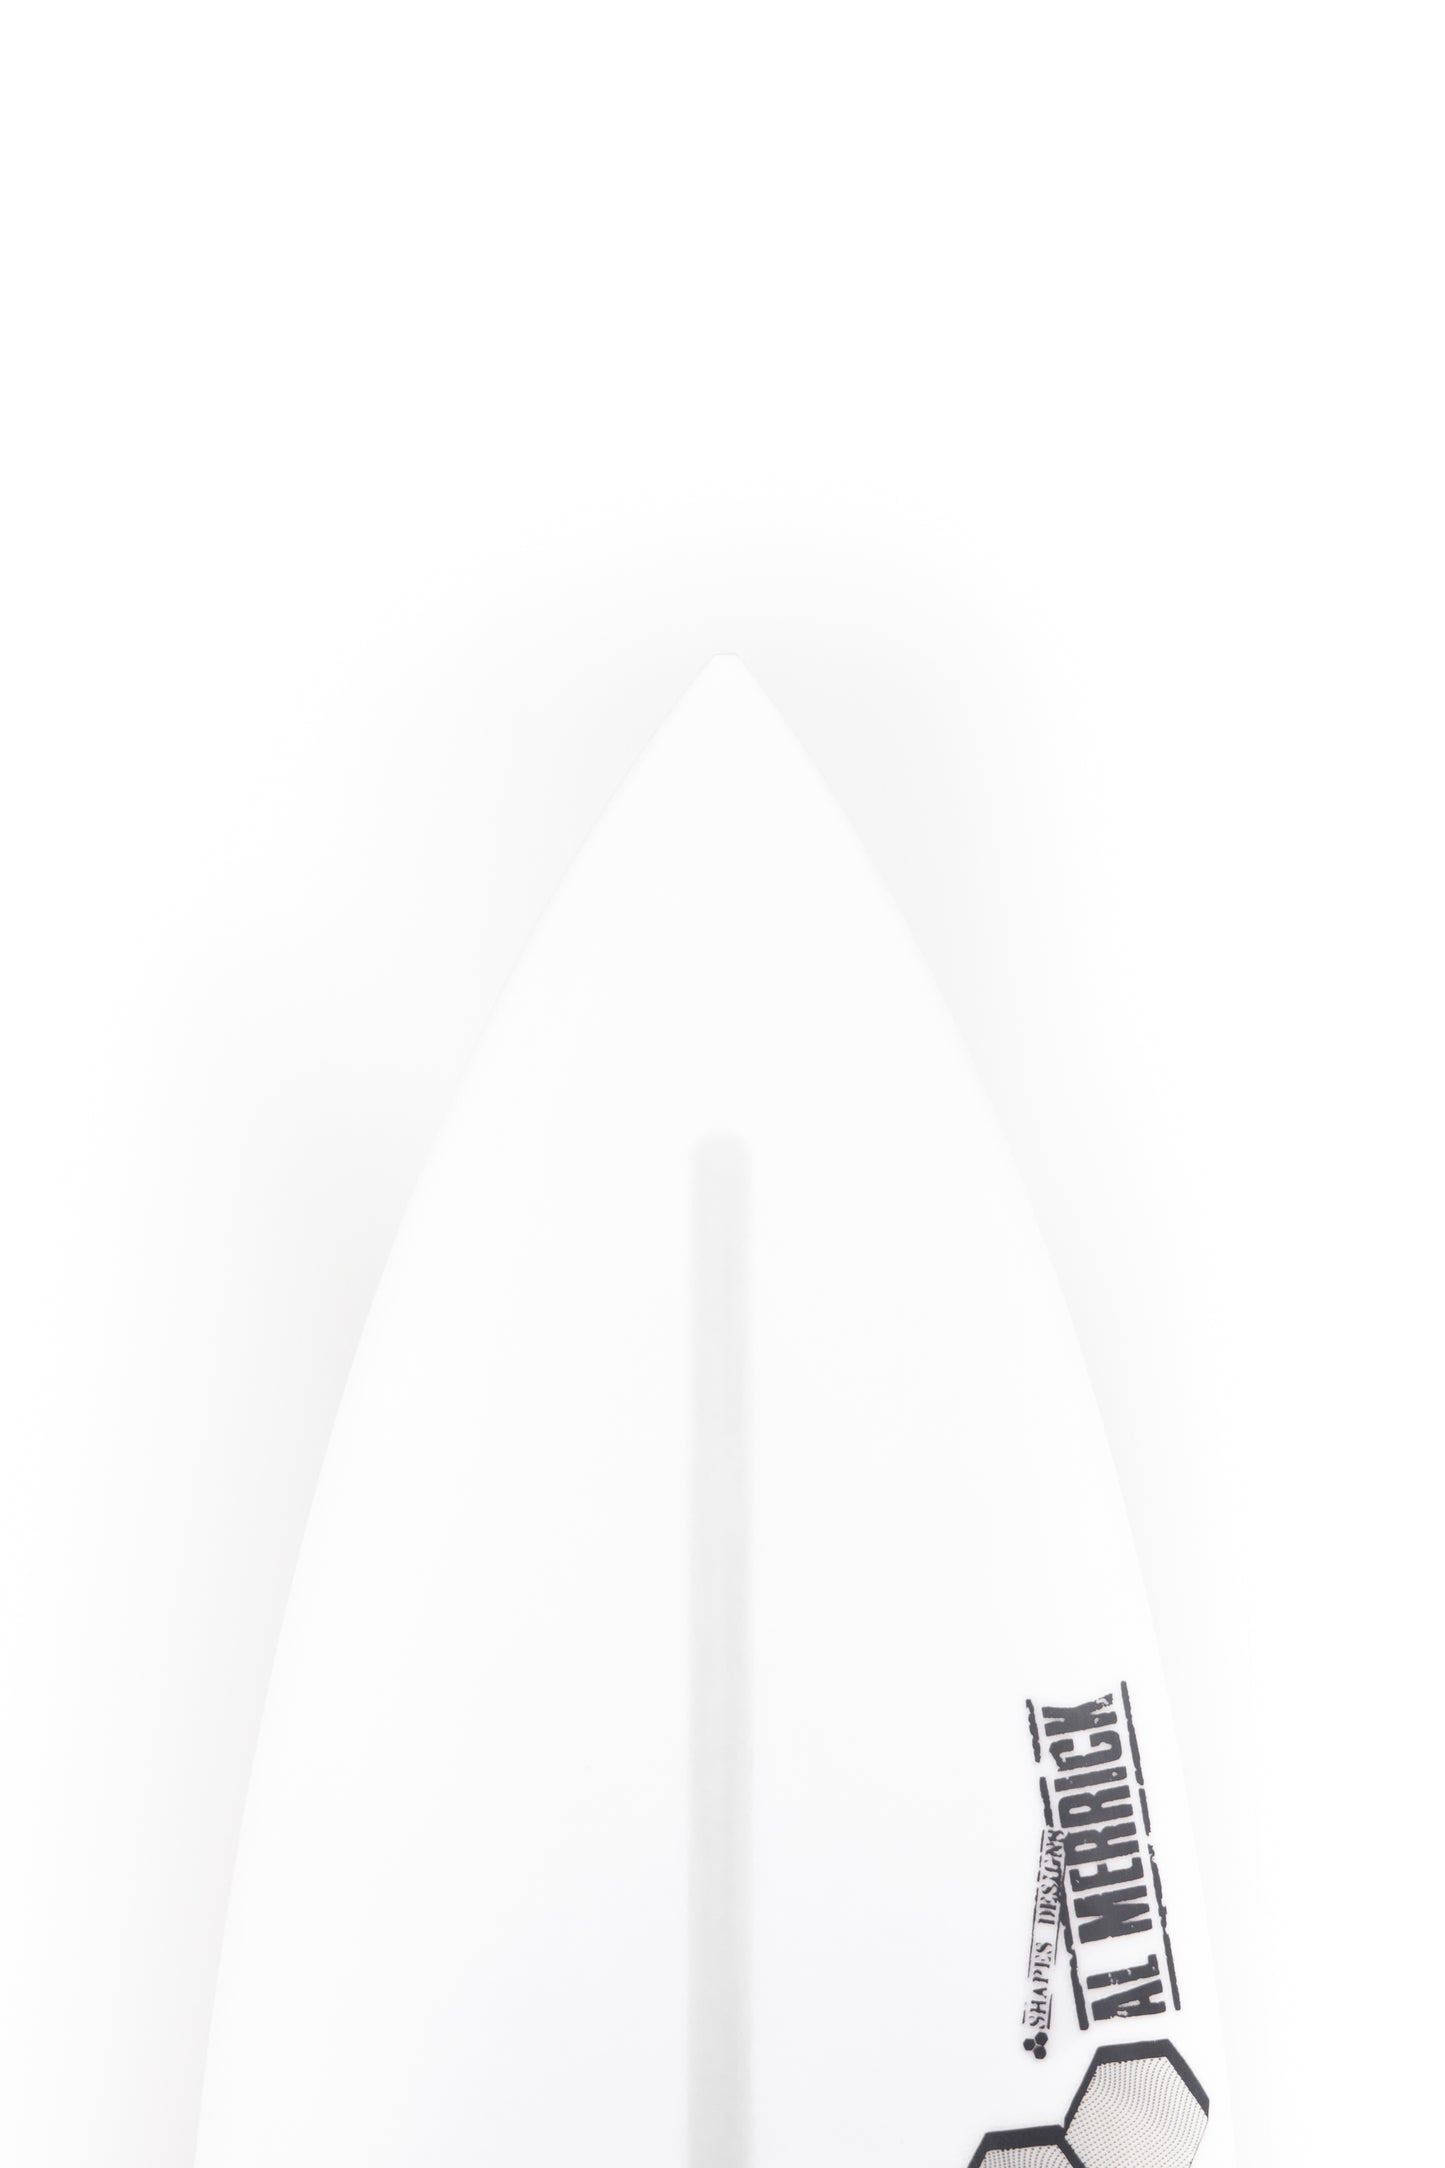 
                  
                    Pukas-Surf-Shop-Channel-Island-Surfboards-Dumpster-Diver-2-Al-Merrick-5_8
                  
                